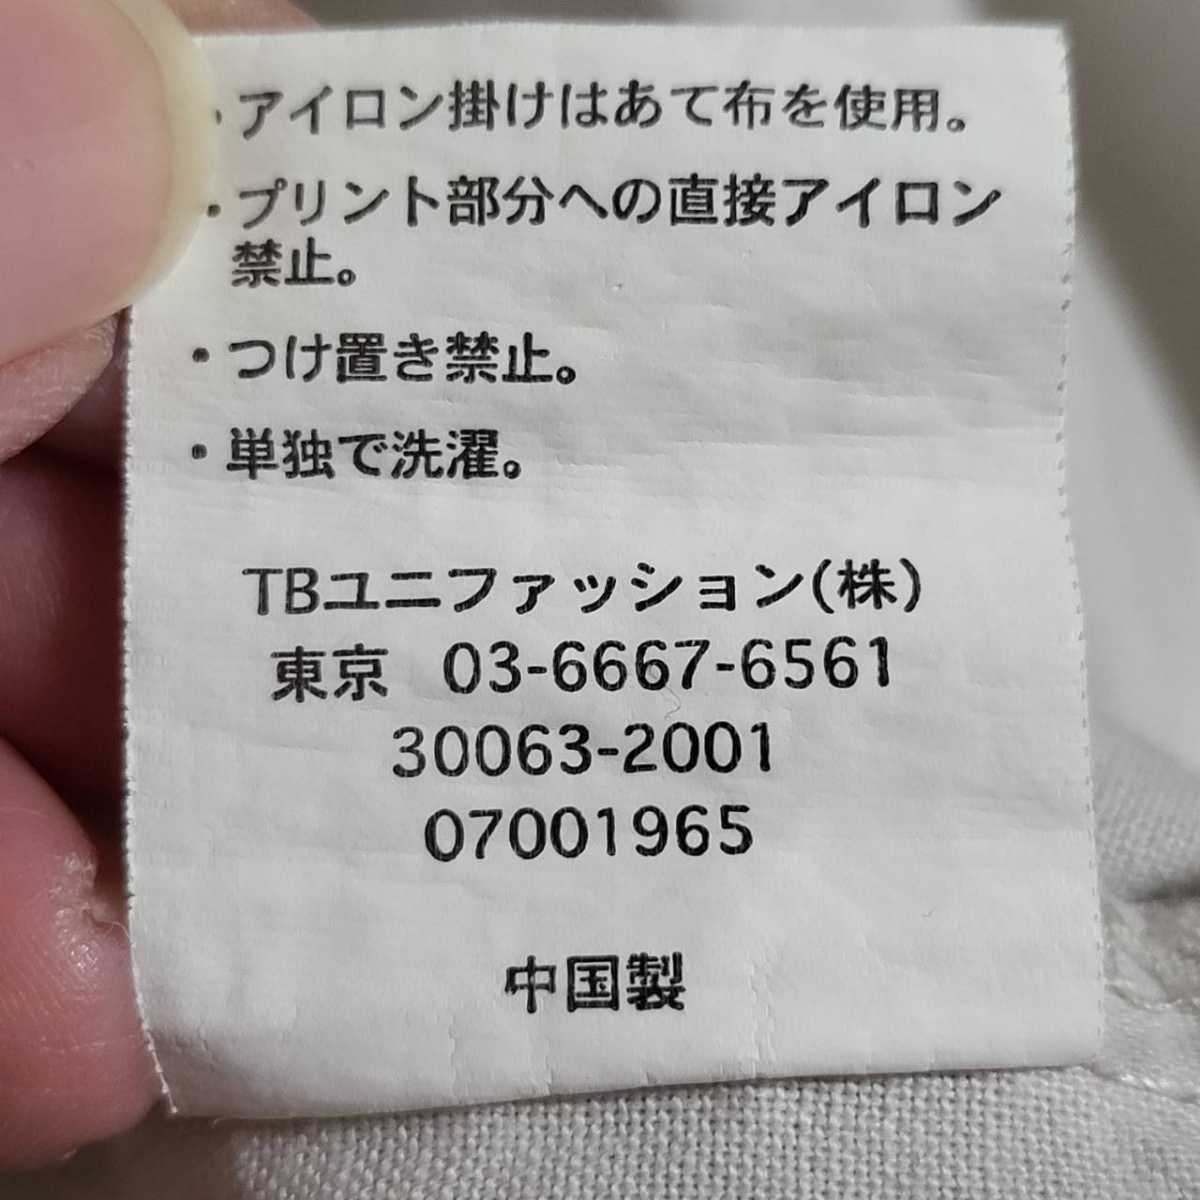 TB UNIFASHION чай Be Uni мода Hino Motors тонкий длинный рукав работа жакет фирма одежда форма 